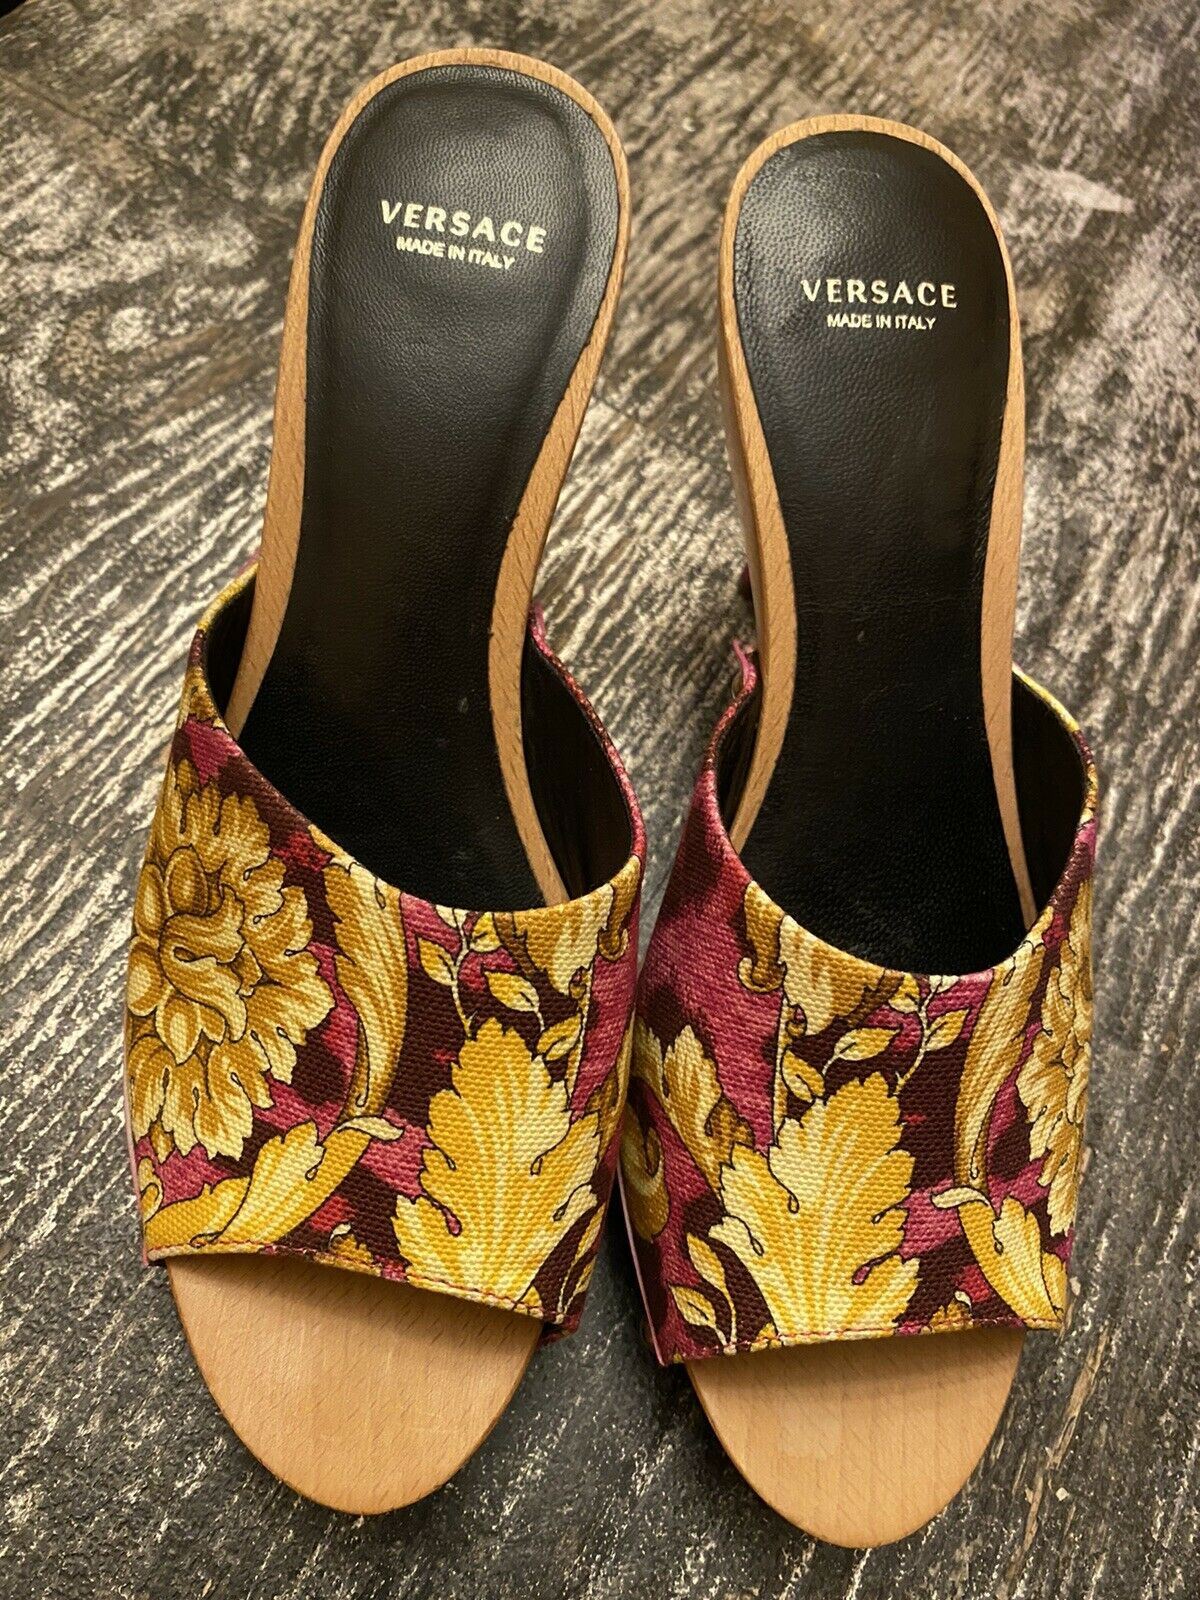 New Versace Women’s Sandal Shoes Multicolor 6 US ( 36 Eu ) Italy